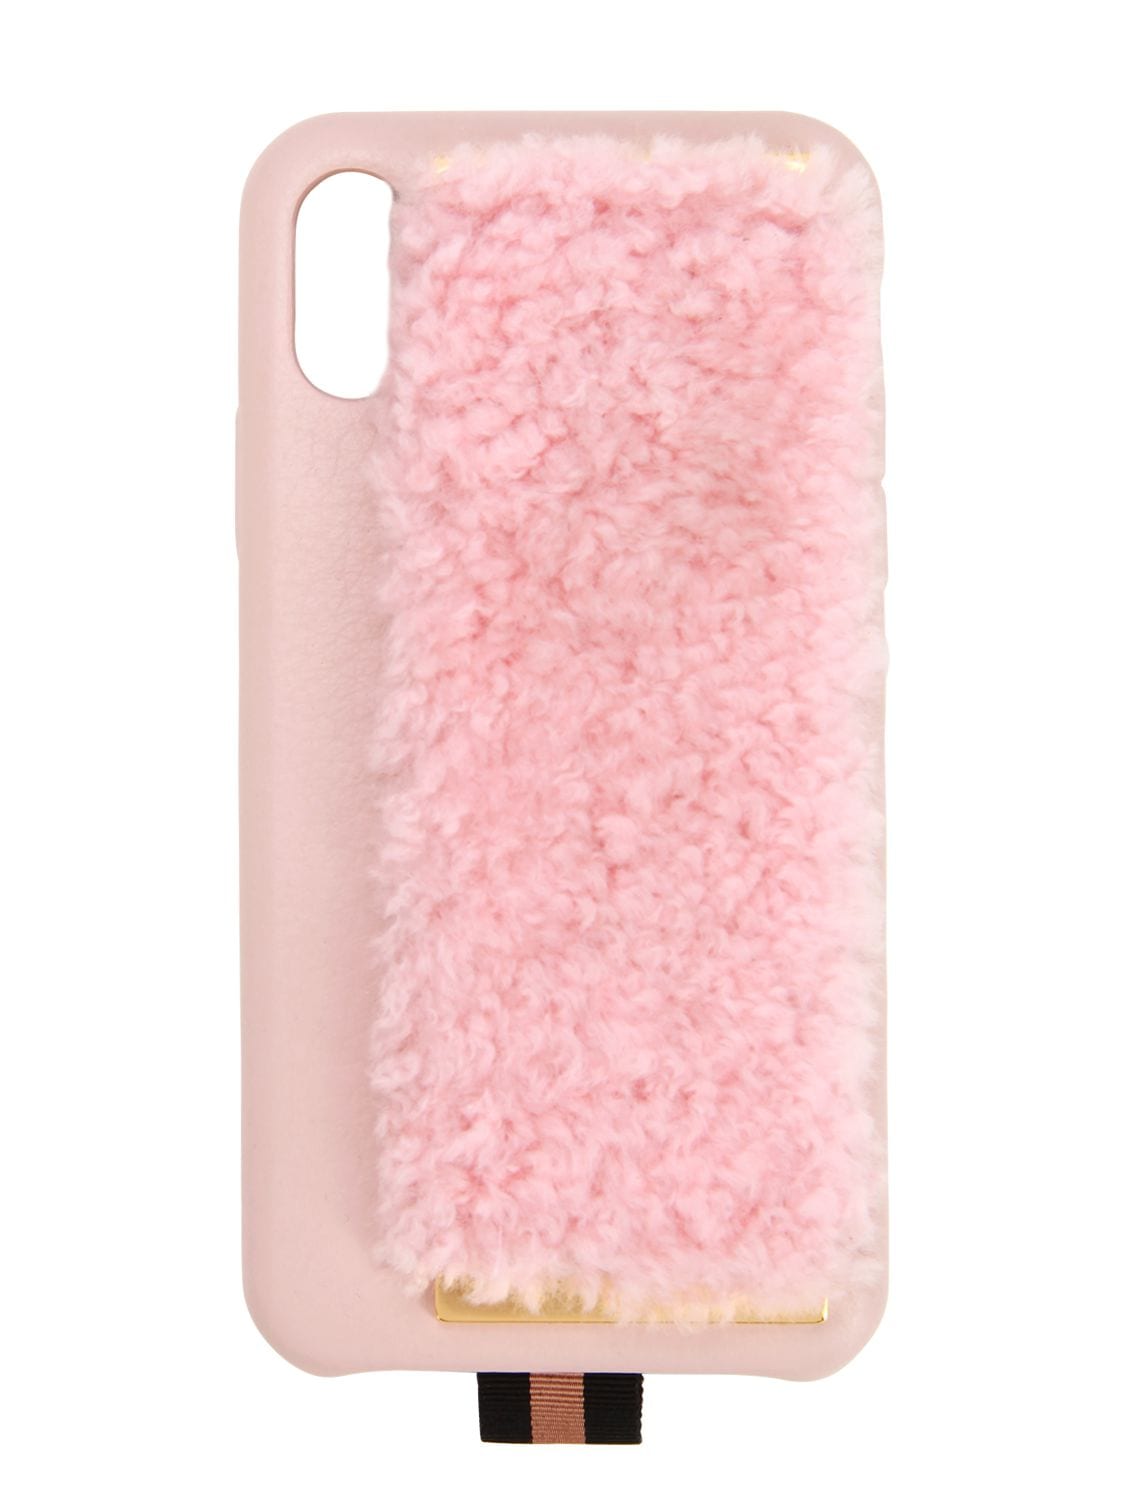 Chaos 剪羊毛iphone Xs手机壳 In Pink